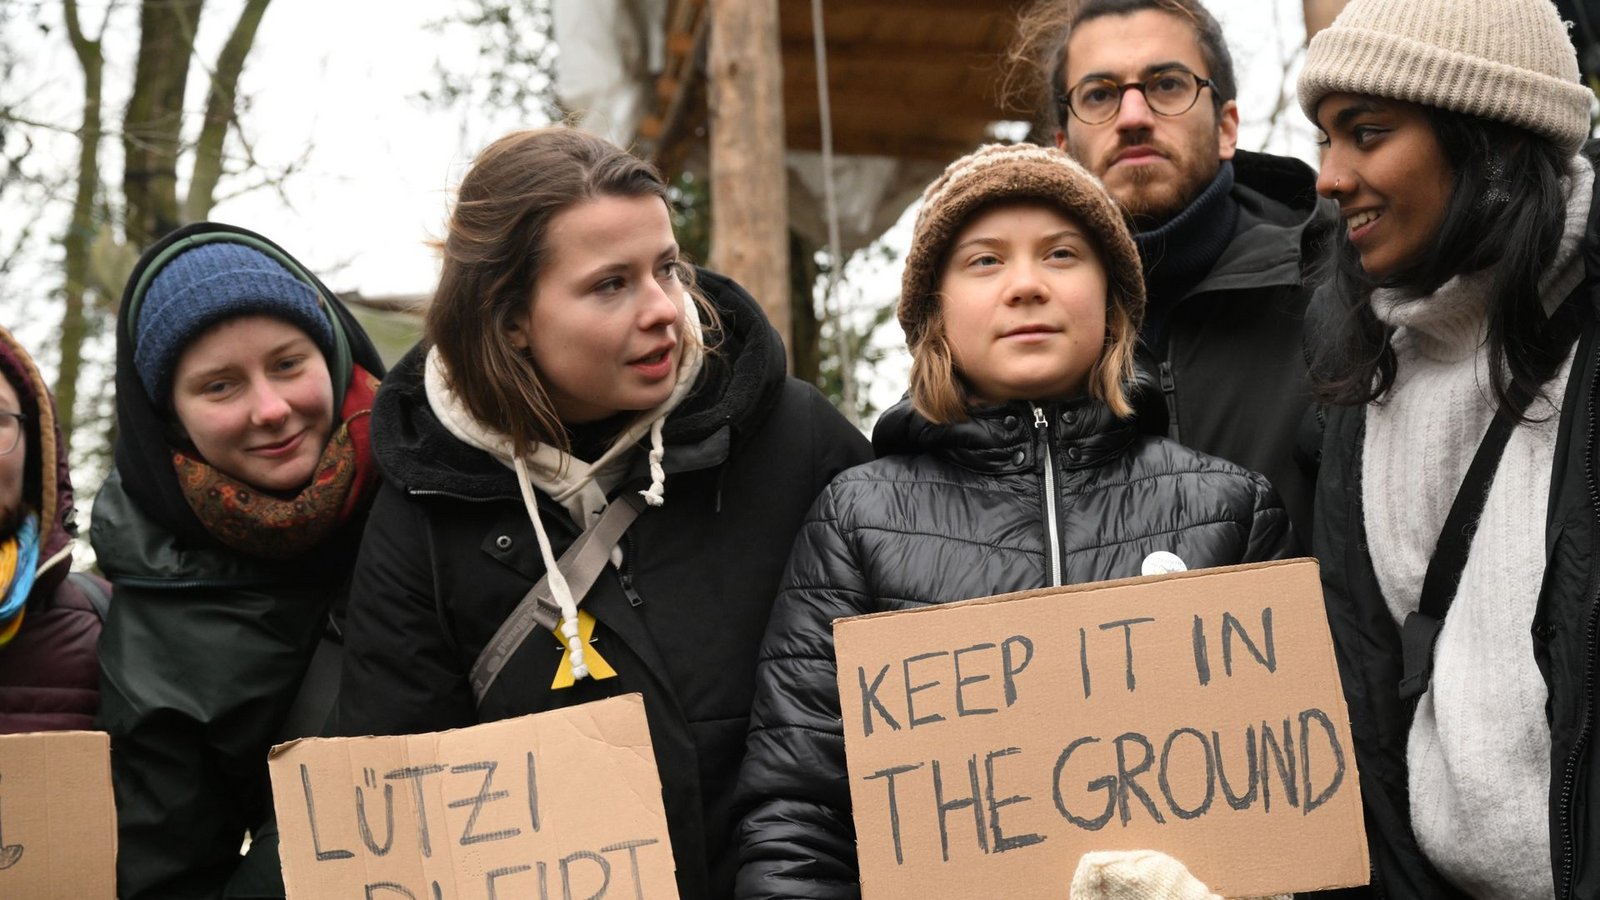 Die Klimaaktivistinnen Luisa Neubauer (2.v.l), Greta Thunberg (3.v.r), Lakshmi Thevasagayam (r) und der Klimaktivist Florian Özcan (2.v.r) protestieren in Lützerath.Foto: Federico Gambarini/dpa